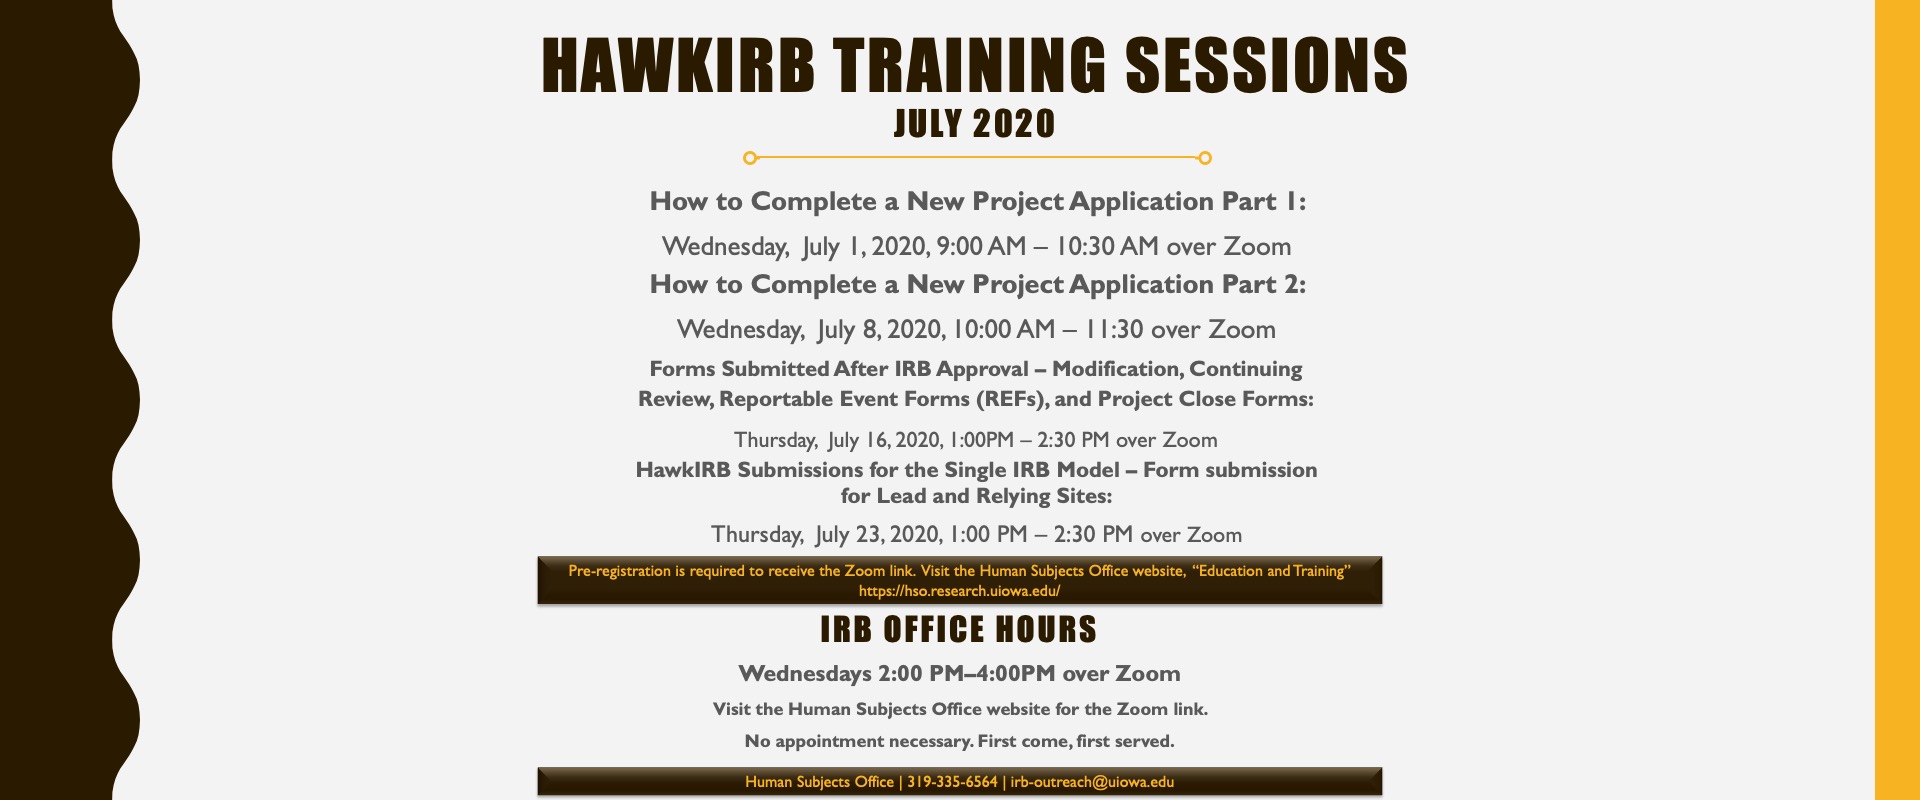 Hawkirb training sessions July 2020 